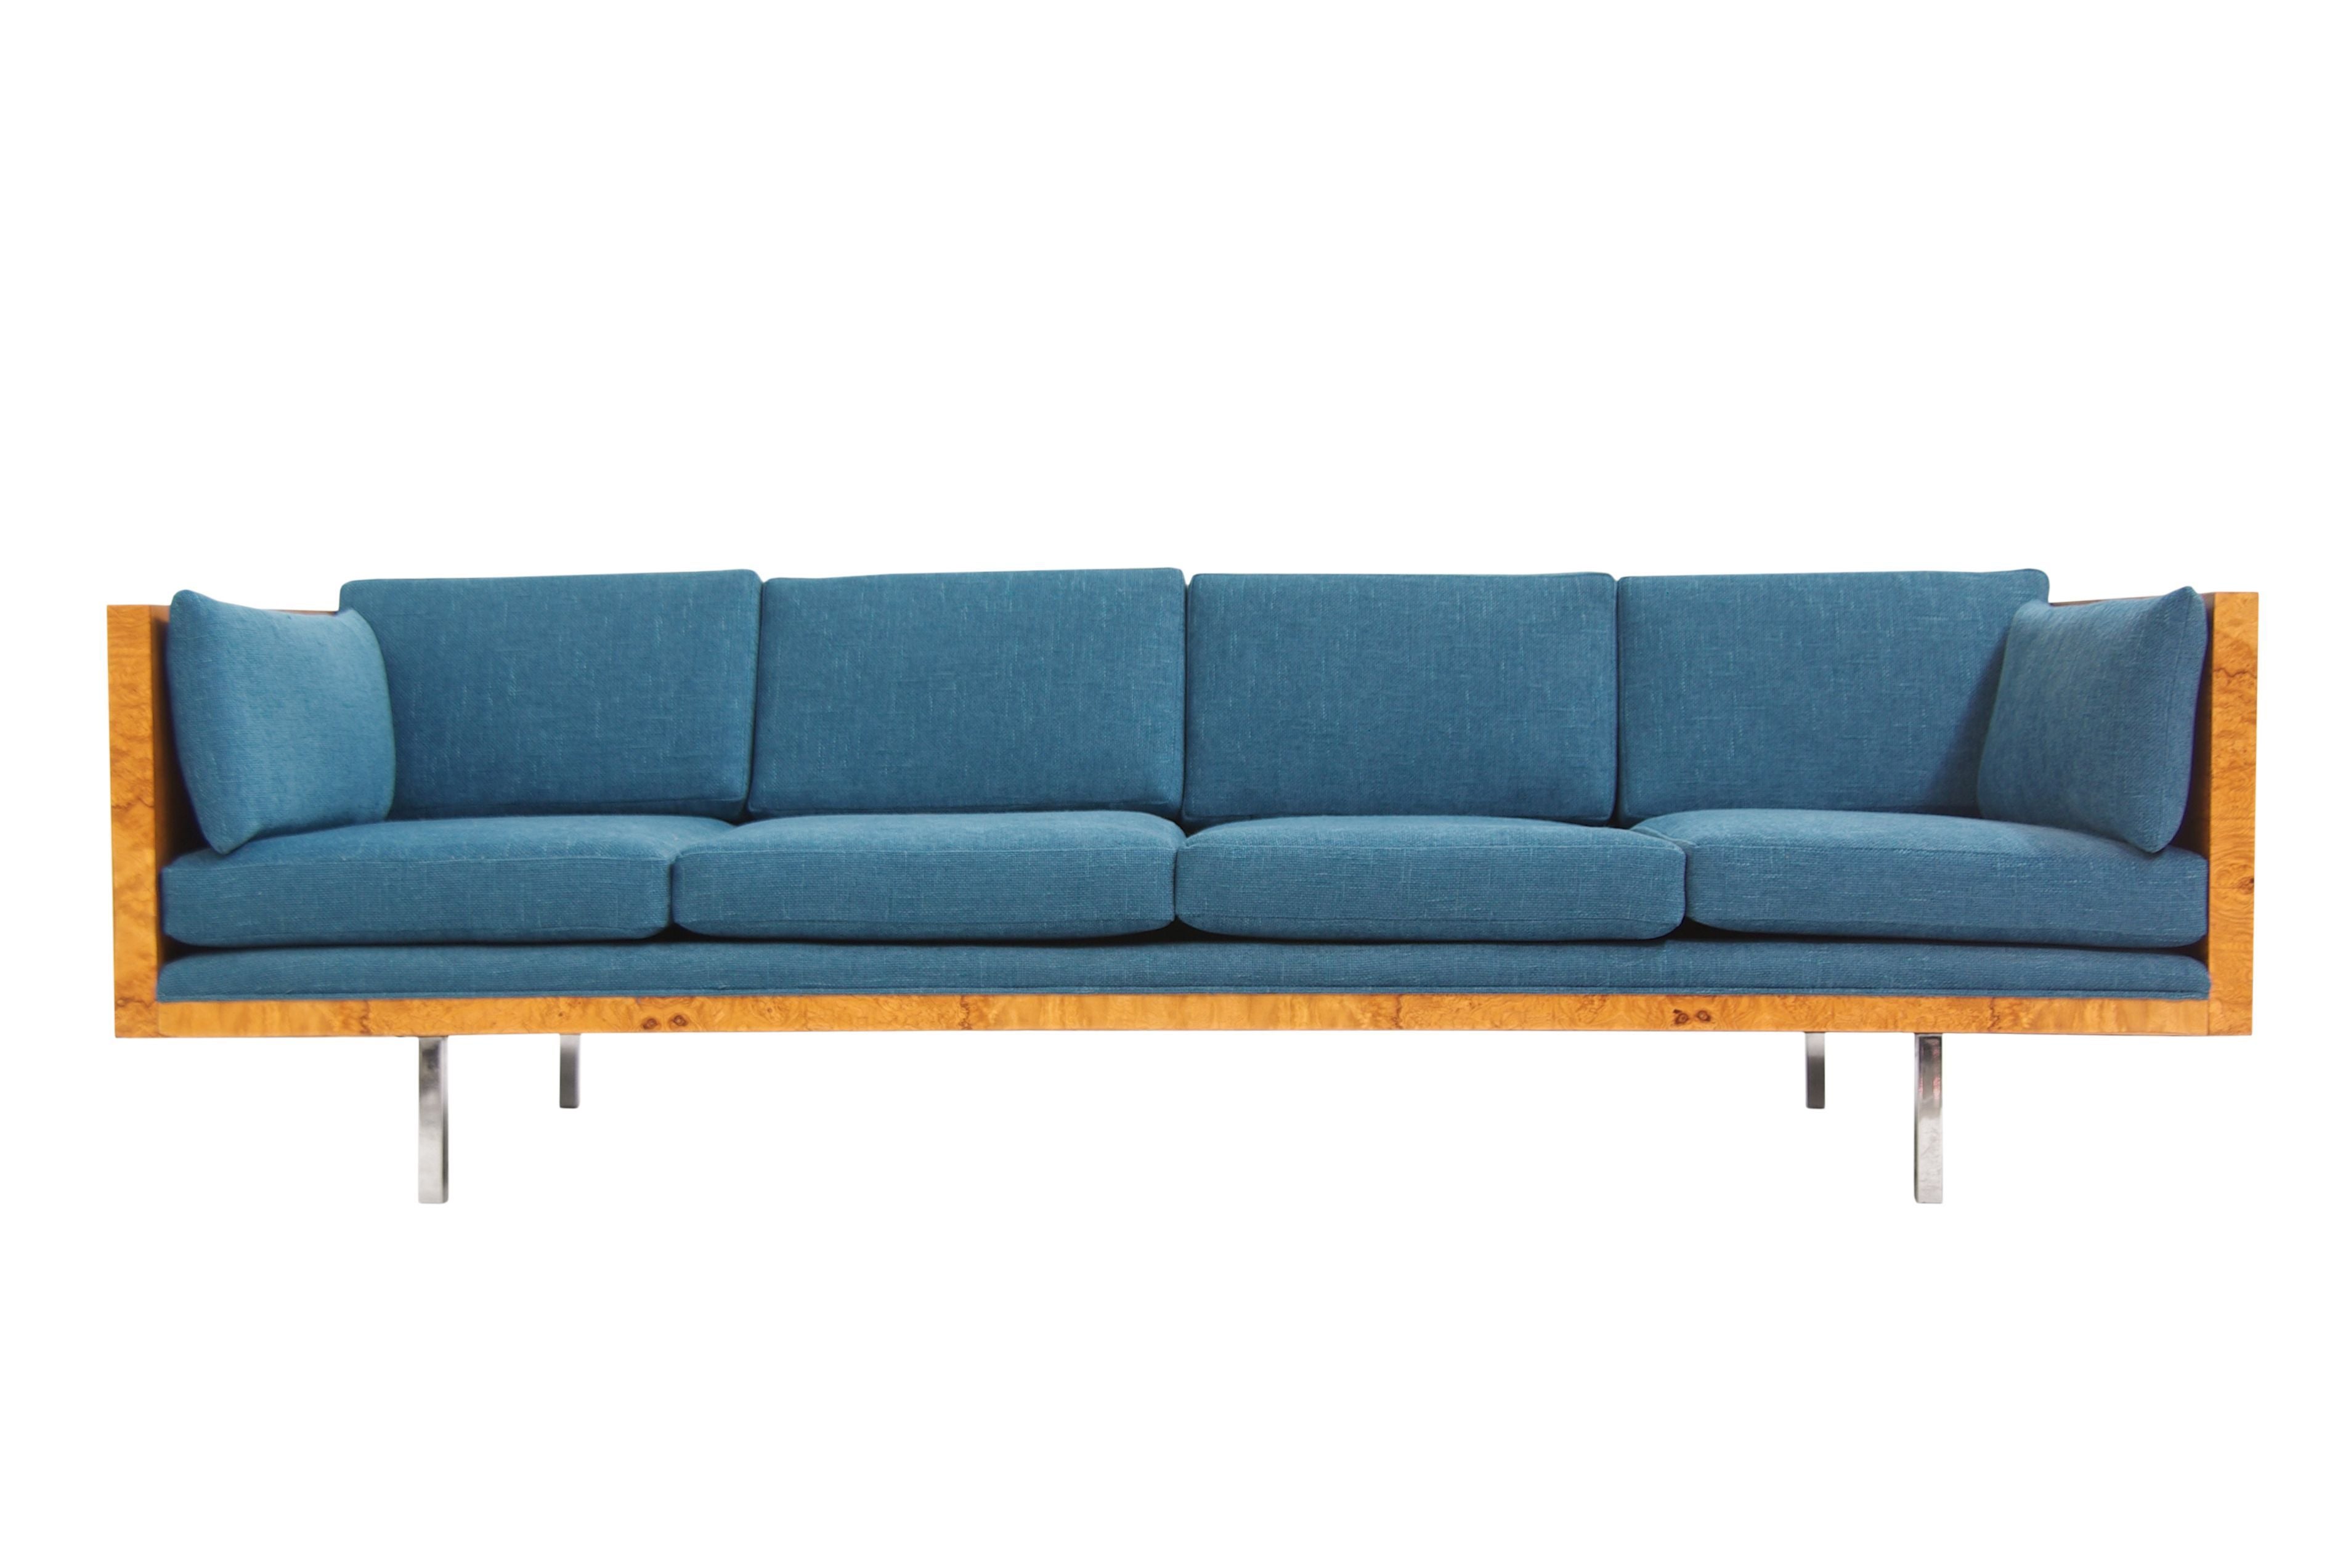 Thayer-Coggin Burl Wood Sofa by Milo Baughman